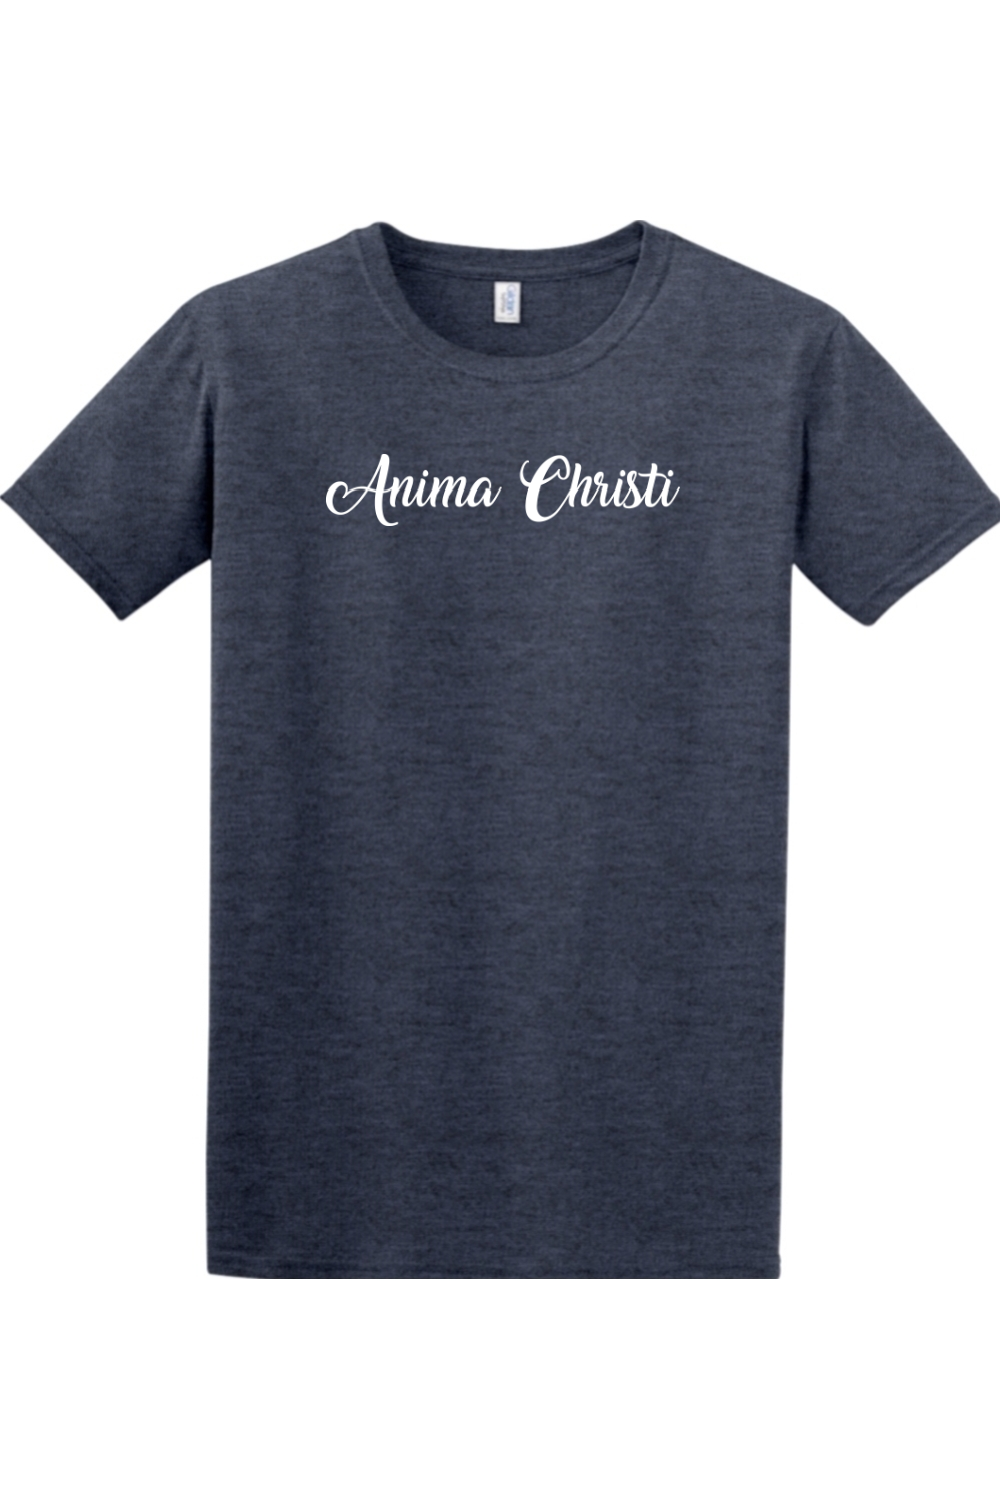 Eucharistic Revival Paint the City Anima Christi T-Shirt